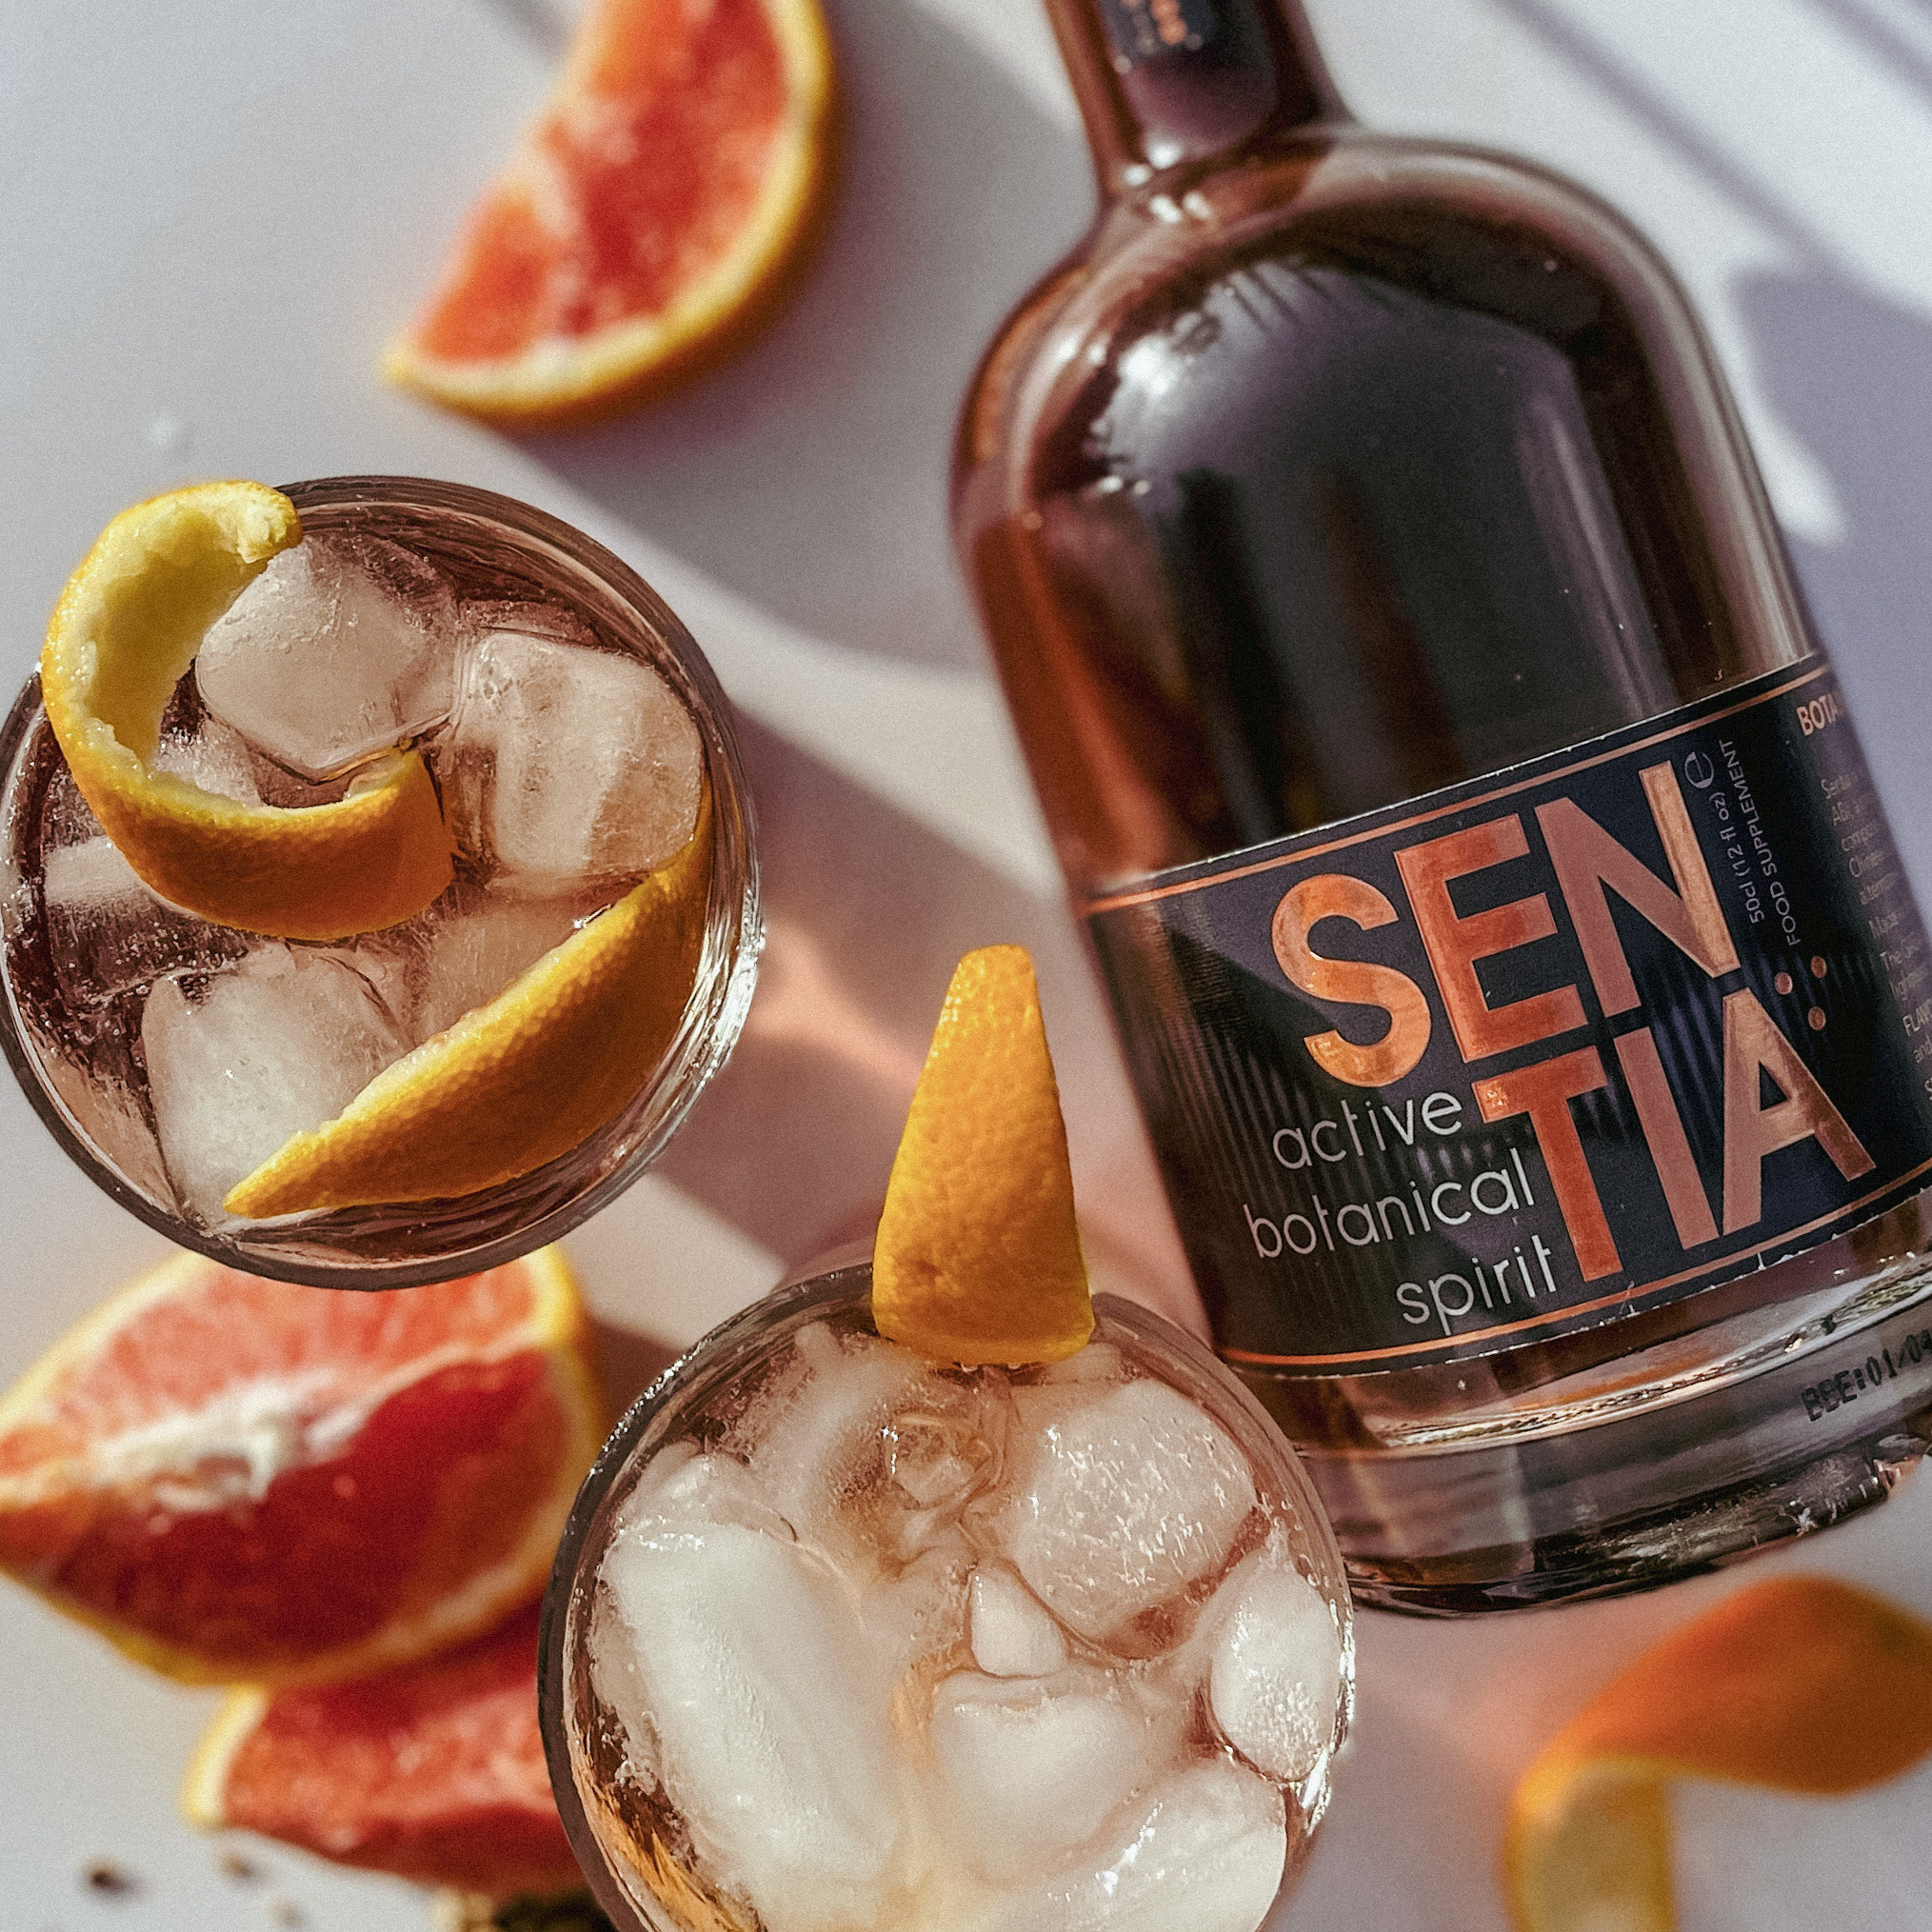 Sentia, the botanical spirit made by GABA Labs. (Photo provided)